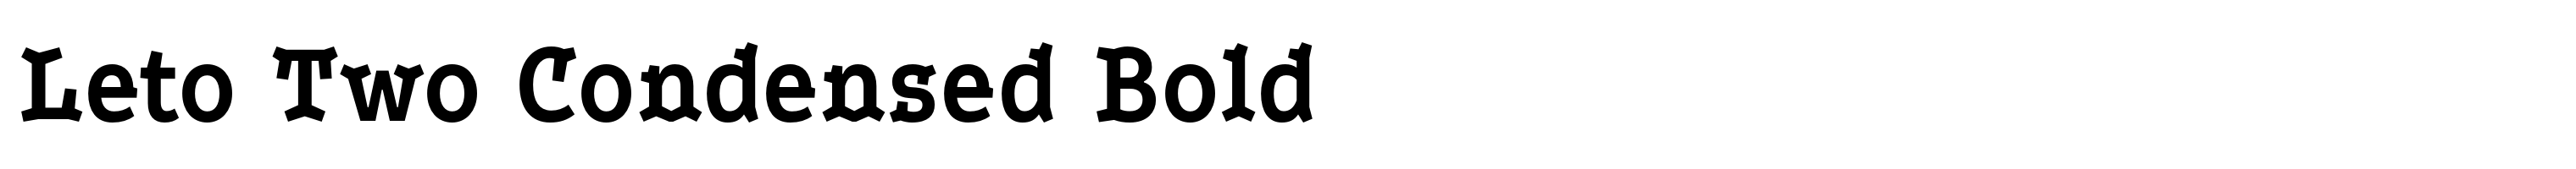 Leto Two Condensed Bold